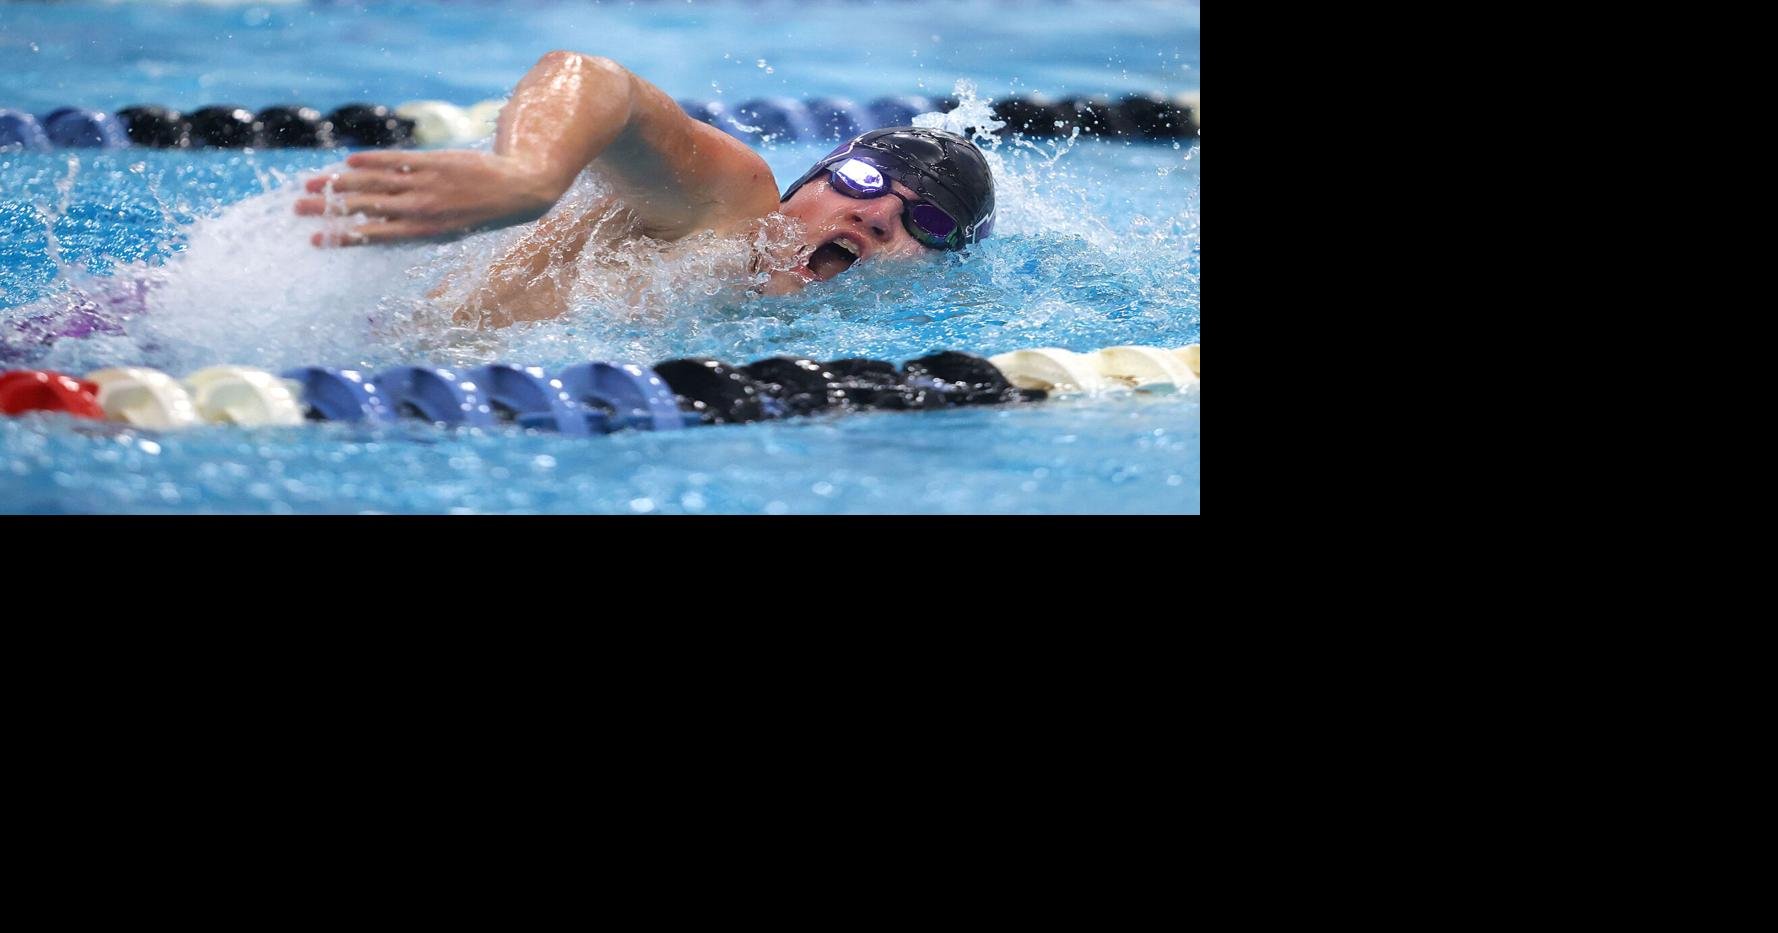 PHOTOS: Northwestern swimming, Sports